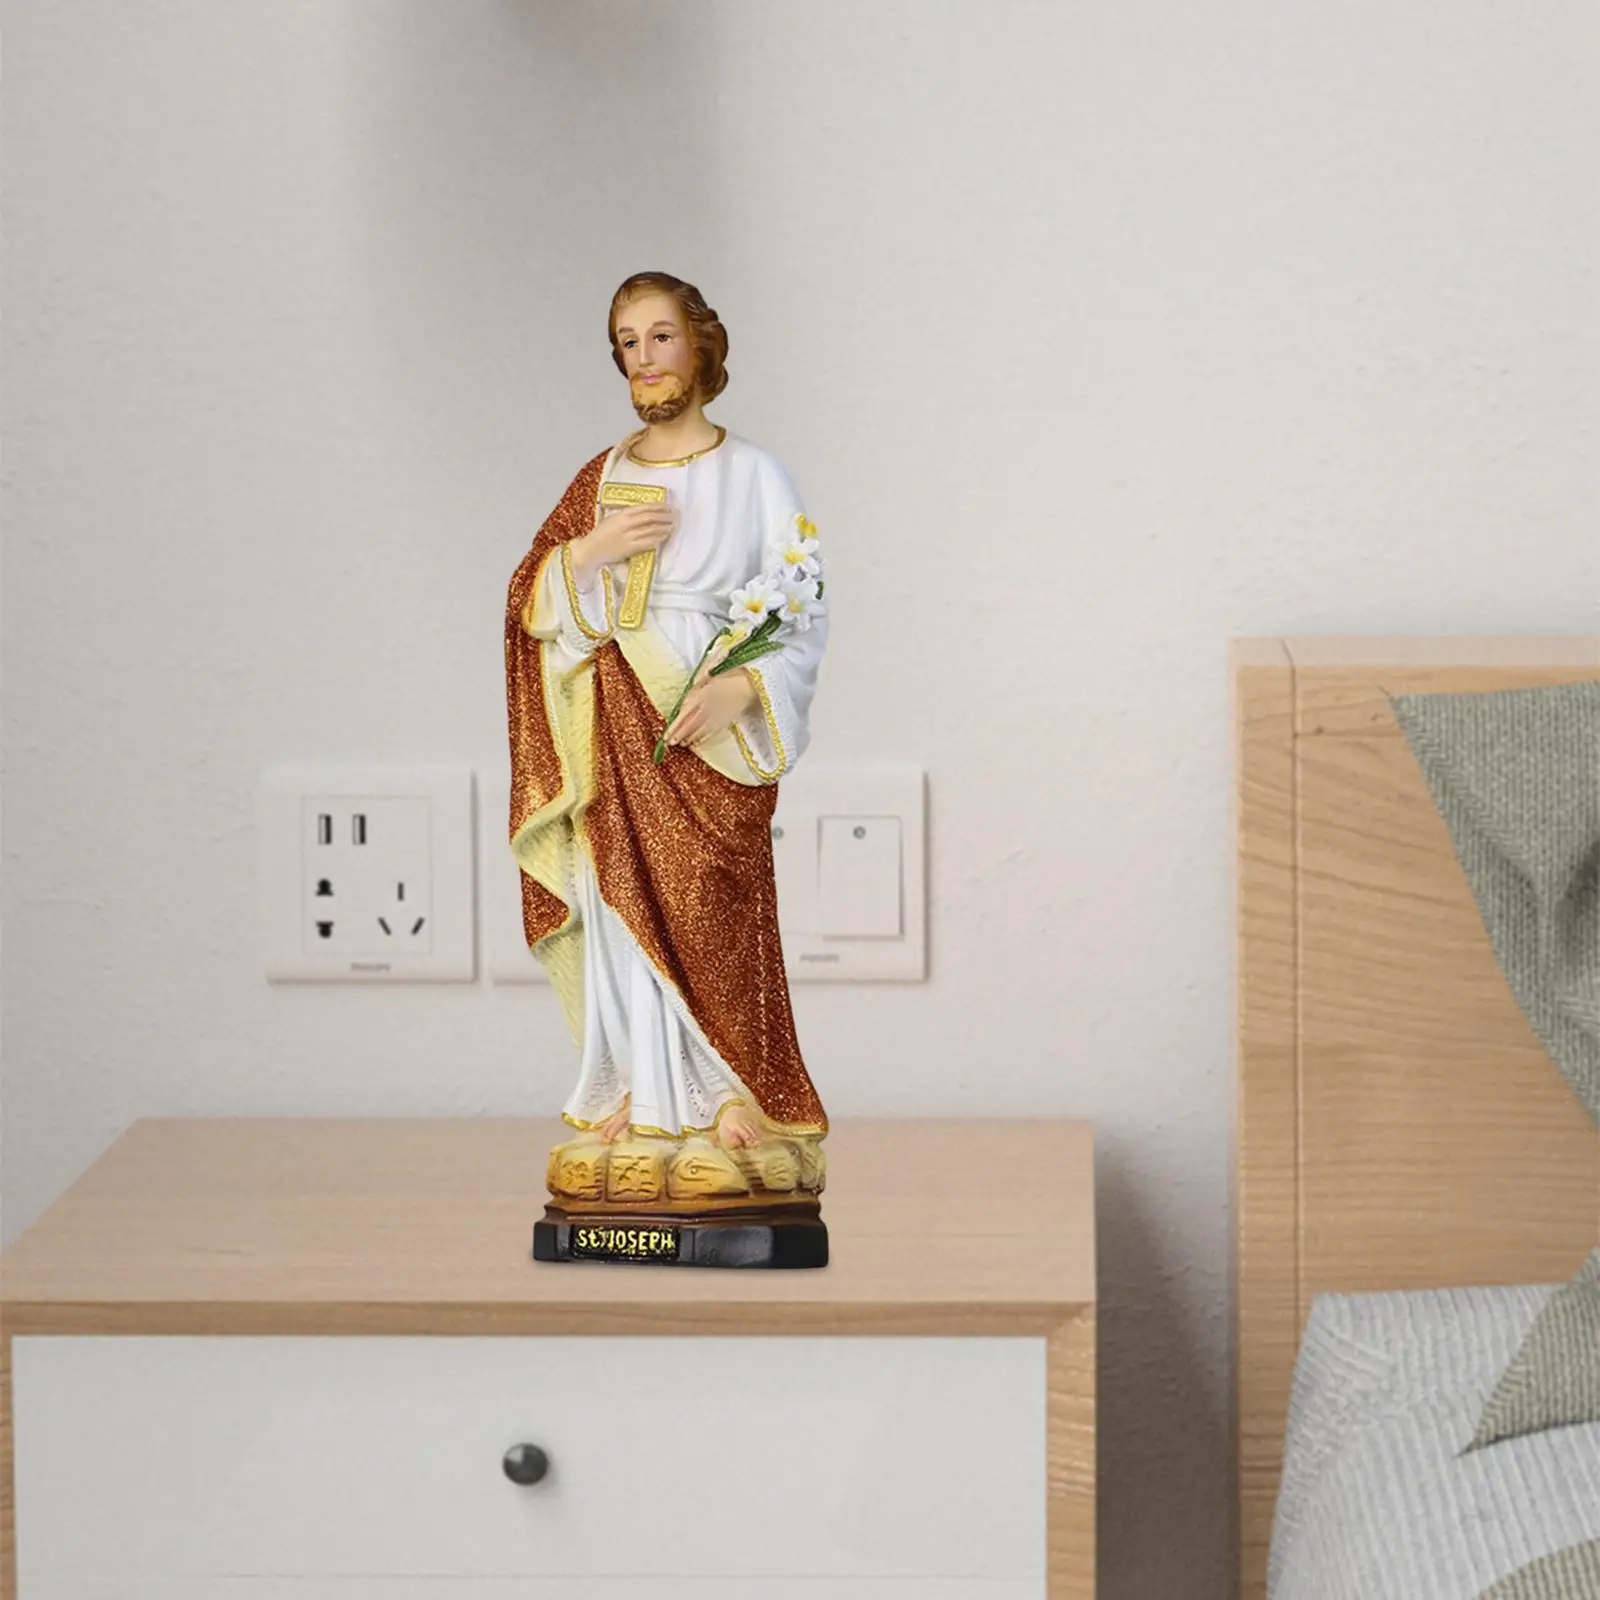 Saint Joseph Figures Catholic Statue Ornament Painted Christmas Decoration Religious Gifts for Fireplace Livingroom Cabinet